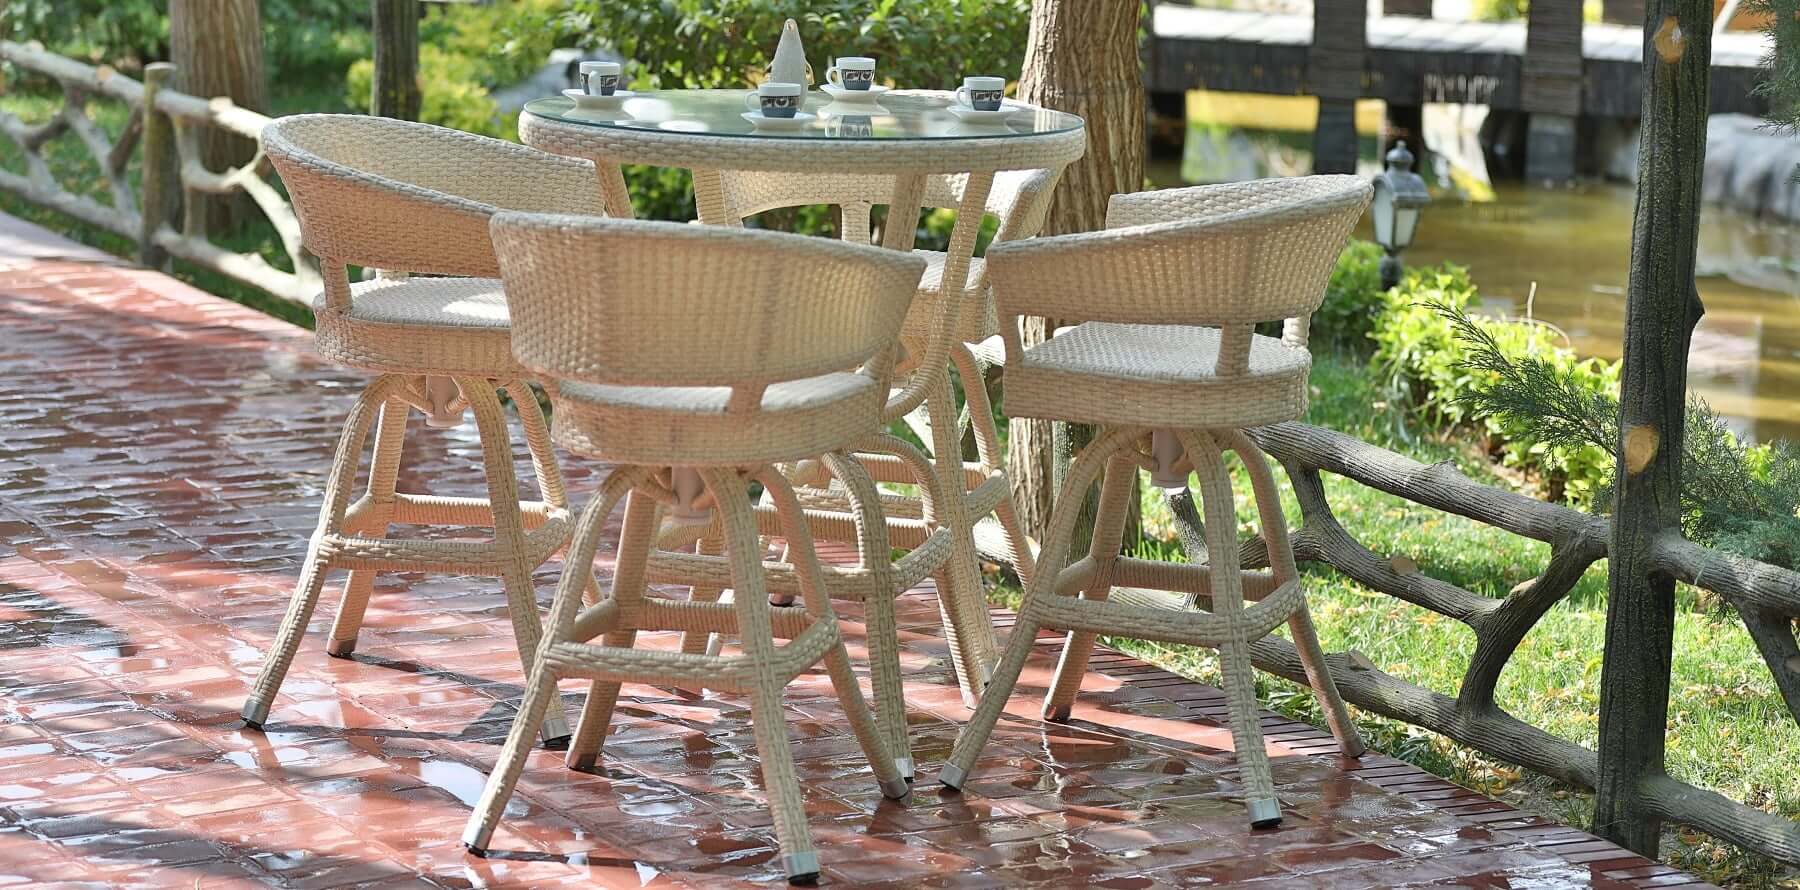 decorose patio bar furniture siatel model0 - ست میز و صندلی بار چهار نفره محوطه مدل سونیا -  - patio-bar-furniture